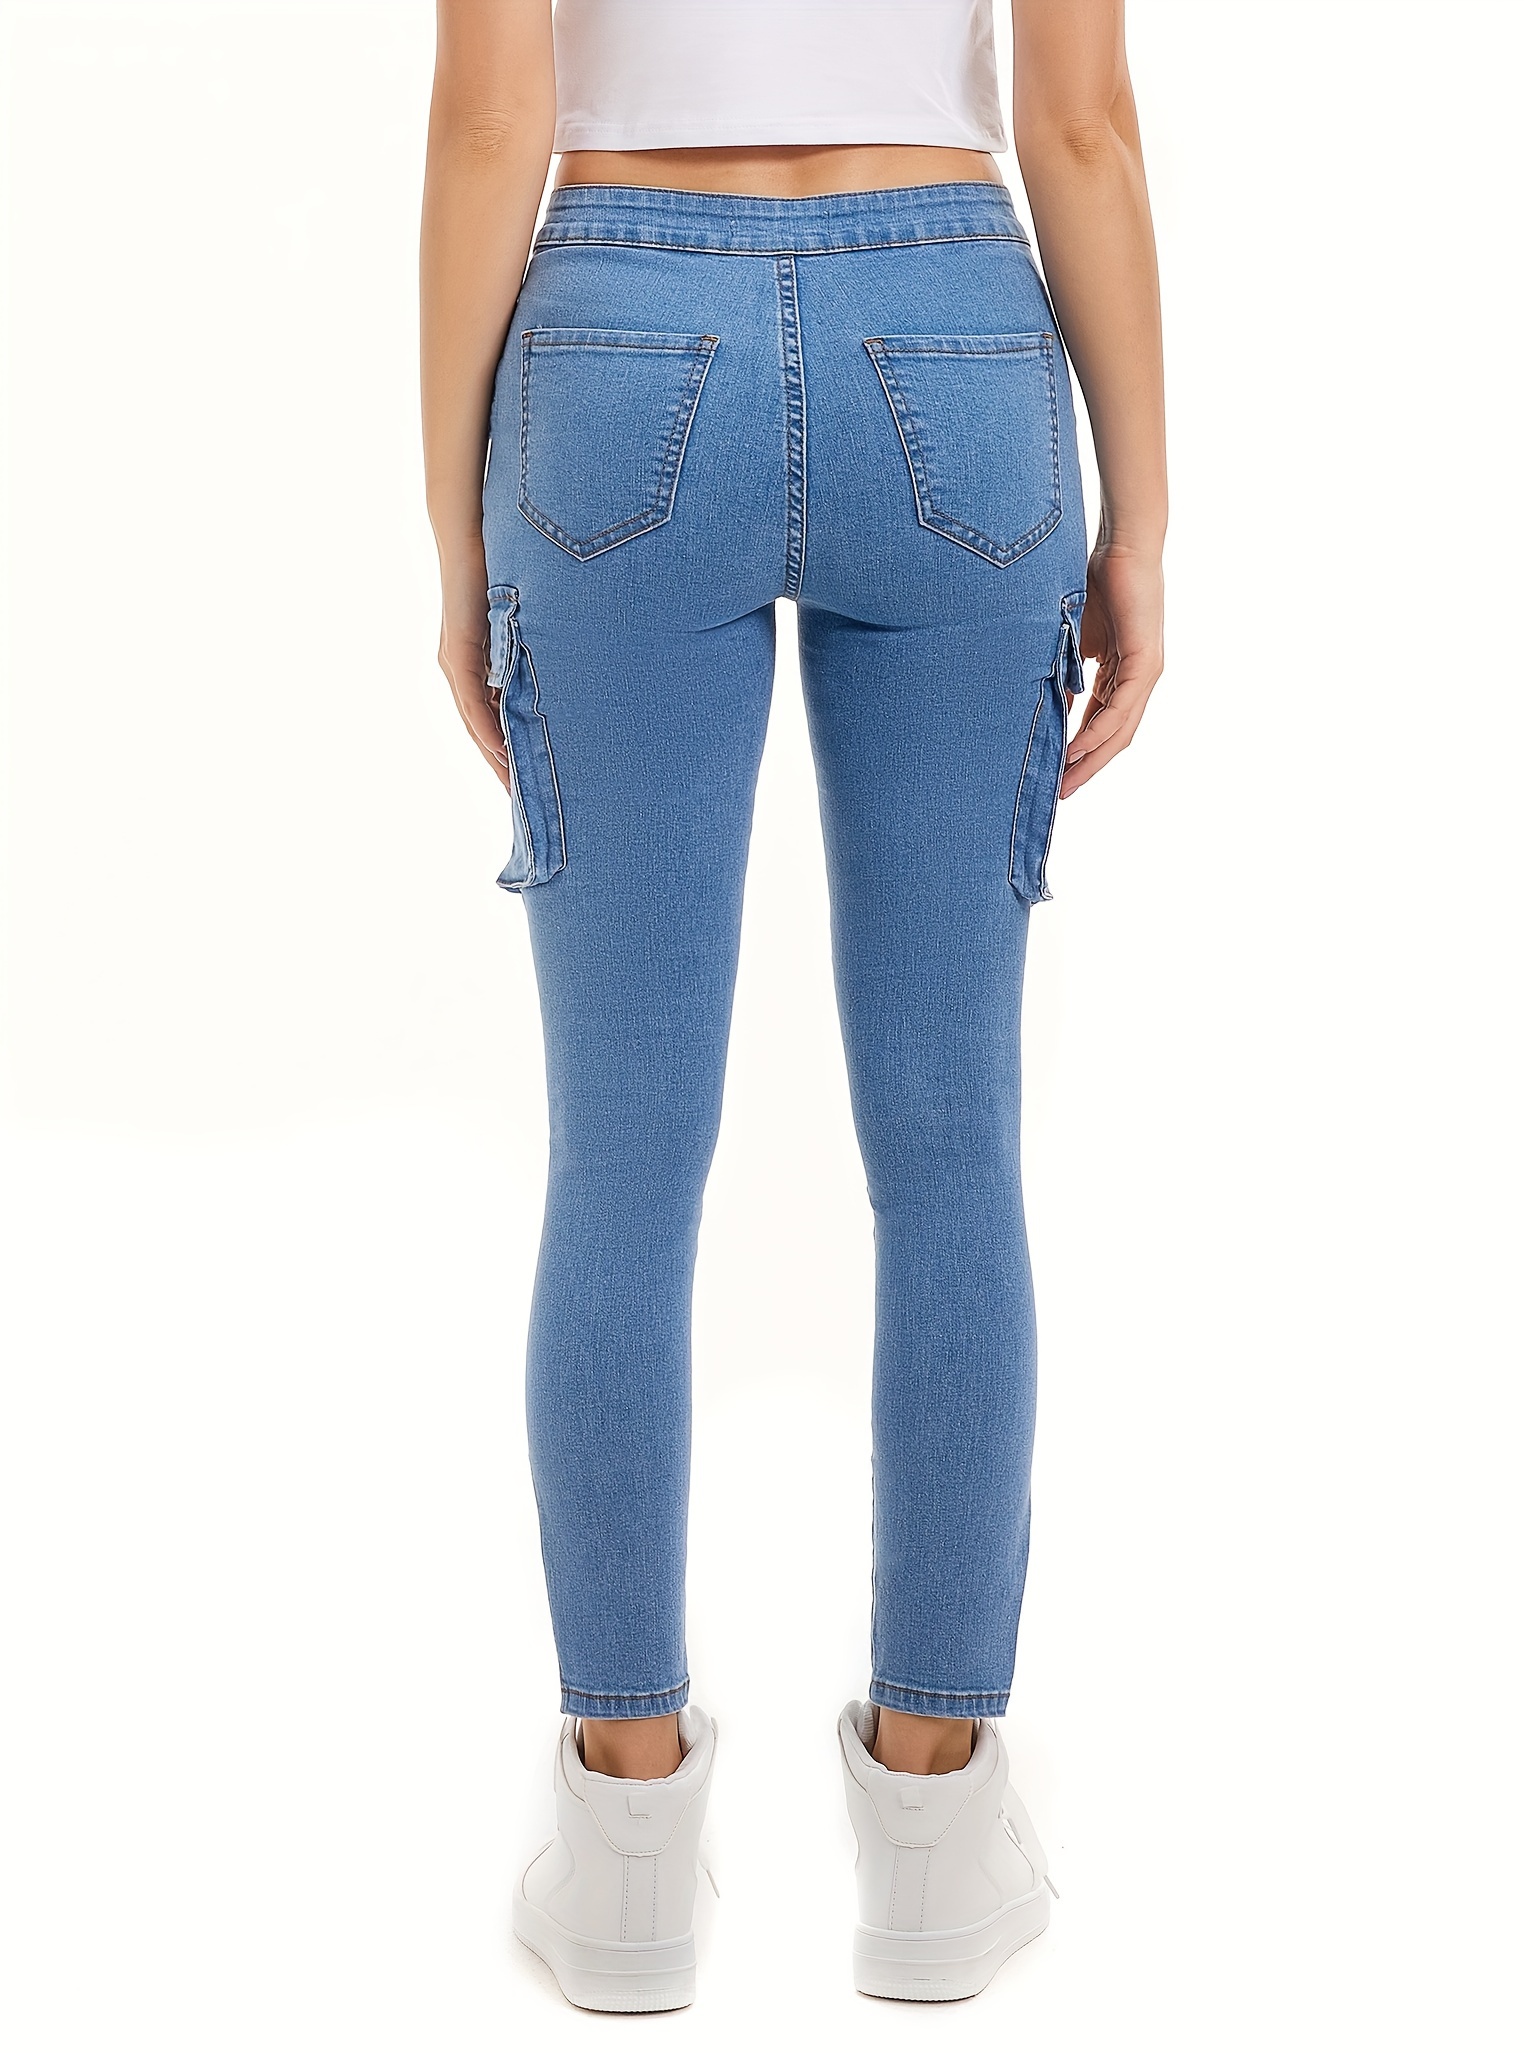 Jeans for Women Zipper Fly Flap Pocket Boyfriend Jeans Jeans for Women  (Color : White, Size : X-Large)